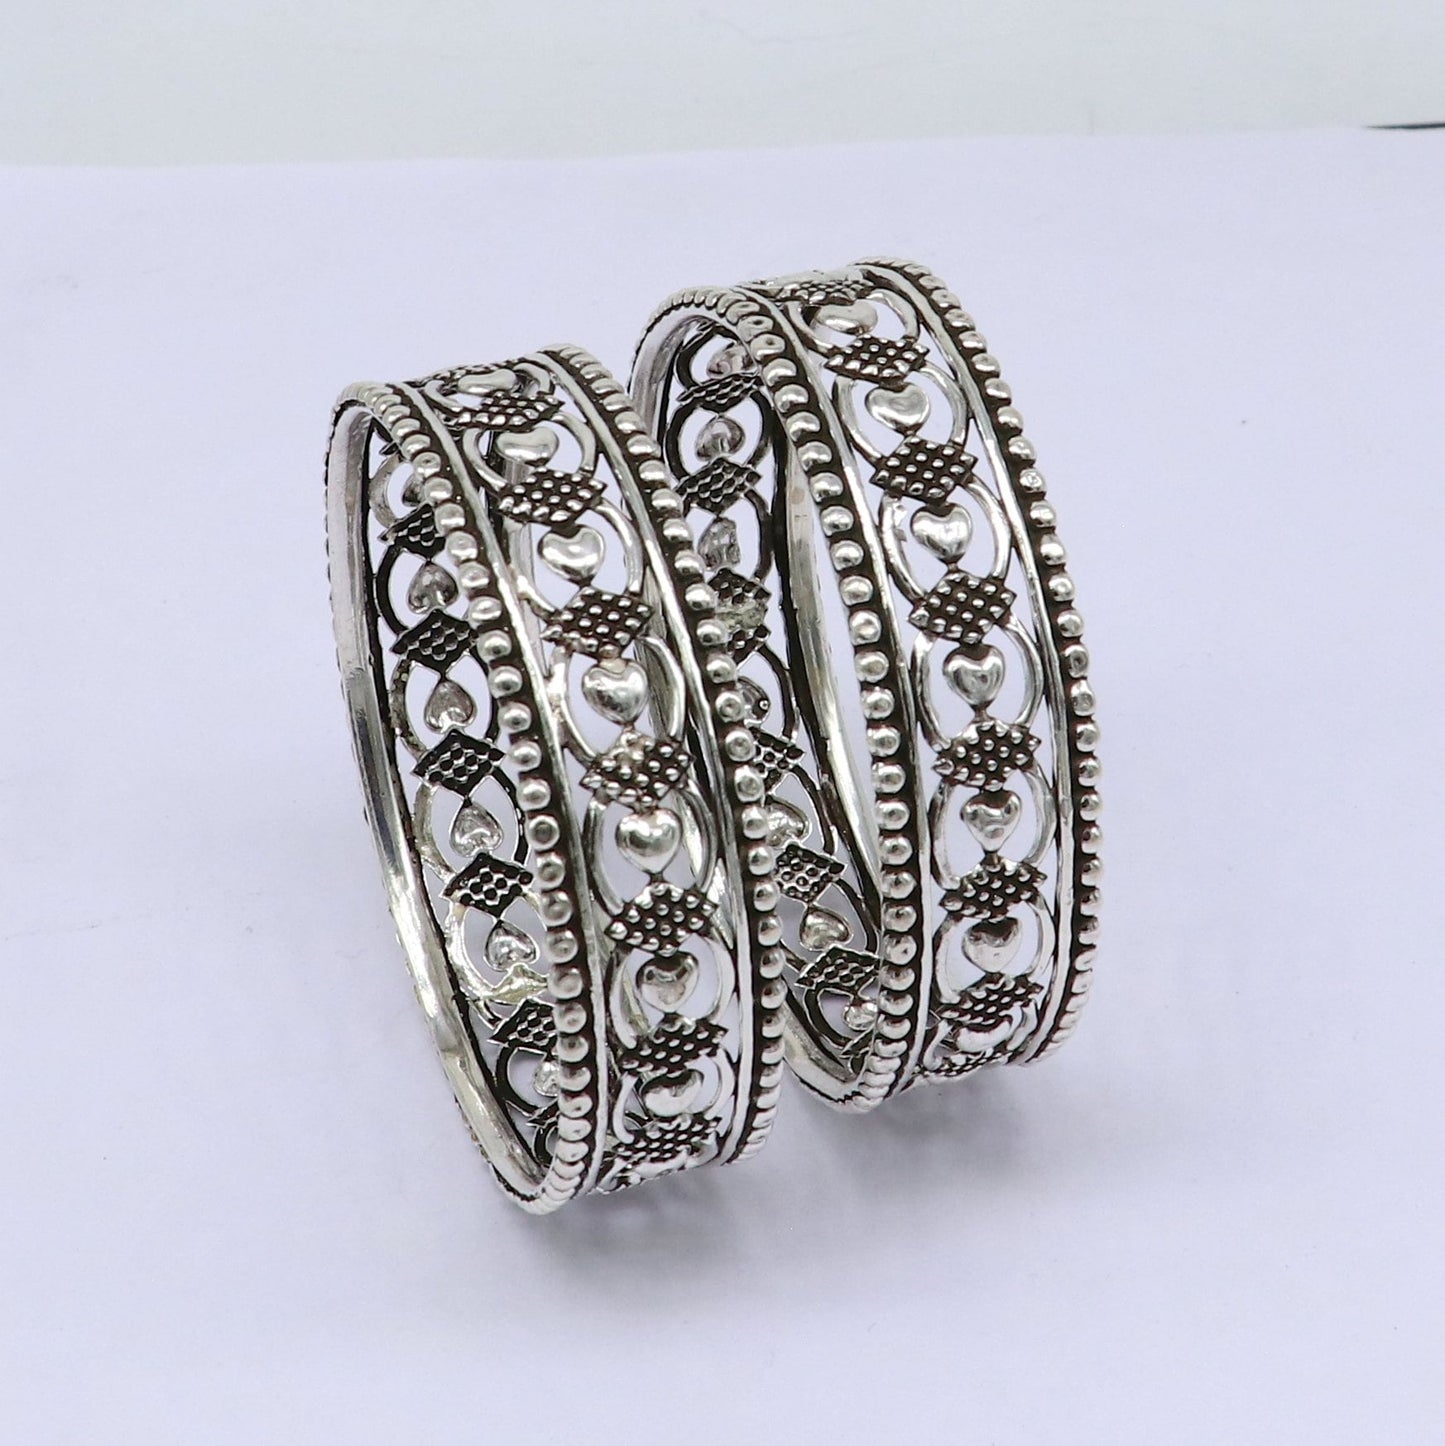 Exclusive 925 sterling silver amazing customized bangle bracelet kada , best brides gifting ethnic stylish tribal fashion jewelry nba396 - TRIBAL ORNAMENTS